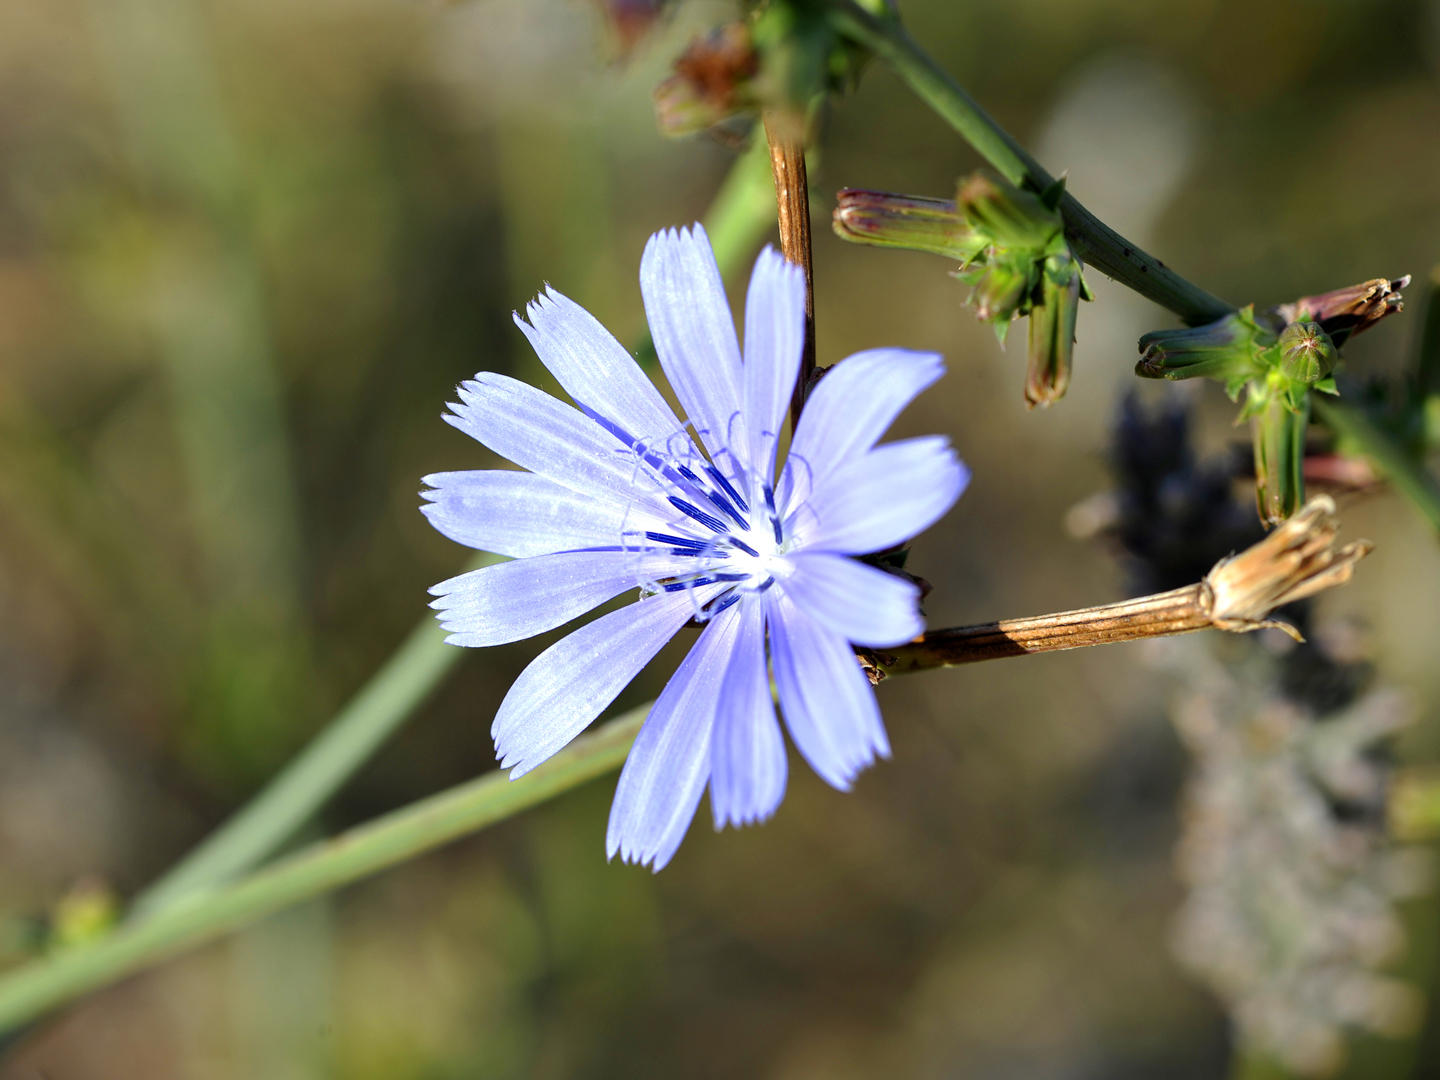 Flower of Luberon - Chicory